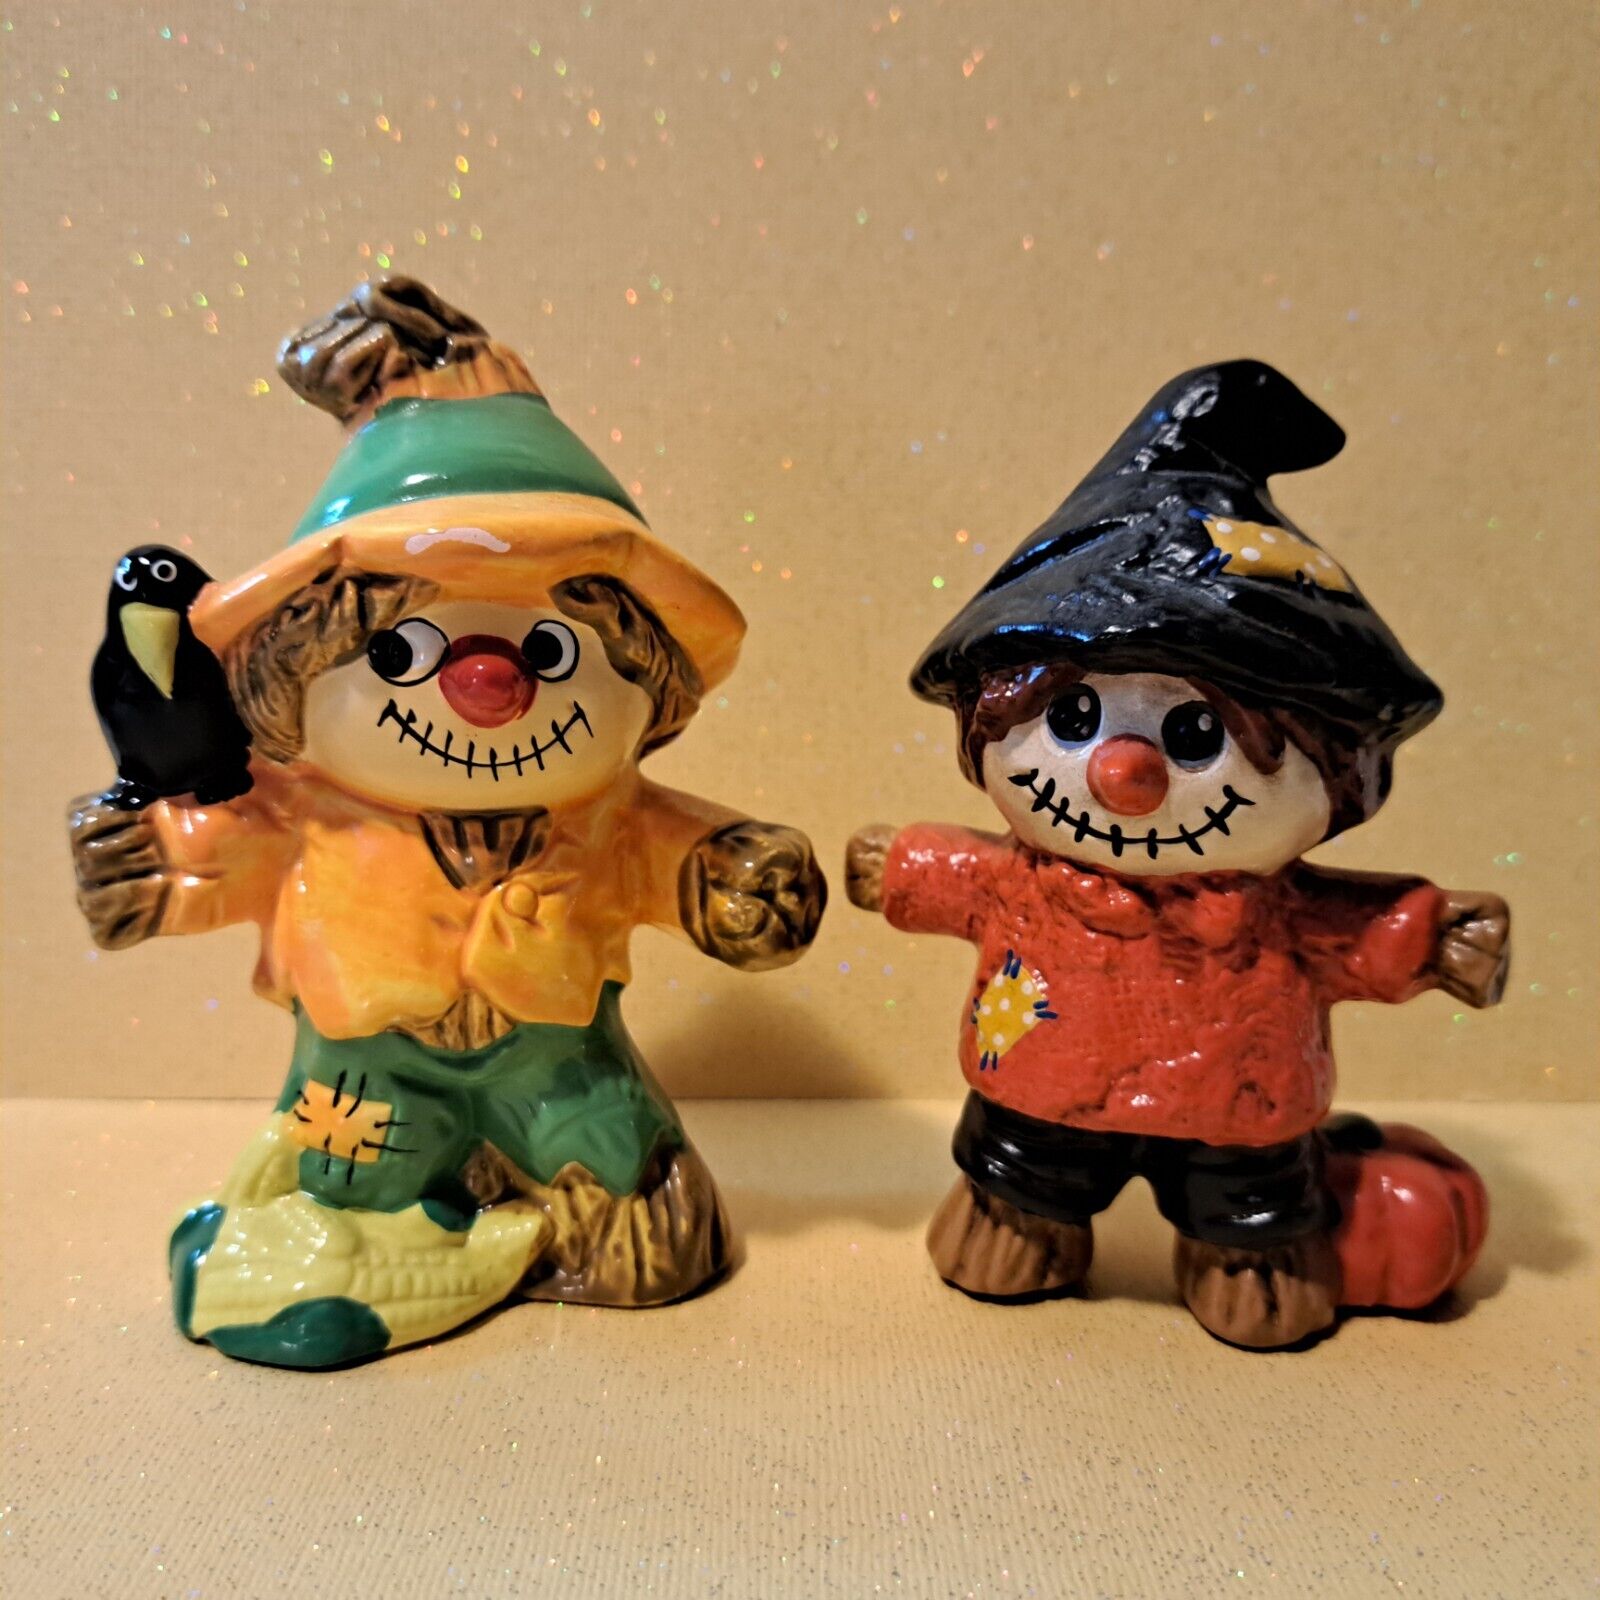 2 VTG Thanksgiving Scarecrow Ceramic Figurines Fall Autumn with Crow & Pumpkin